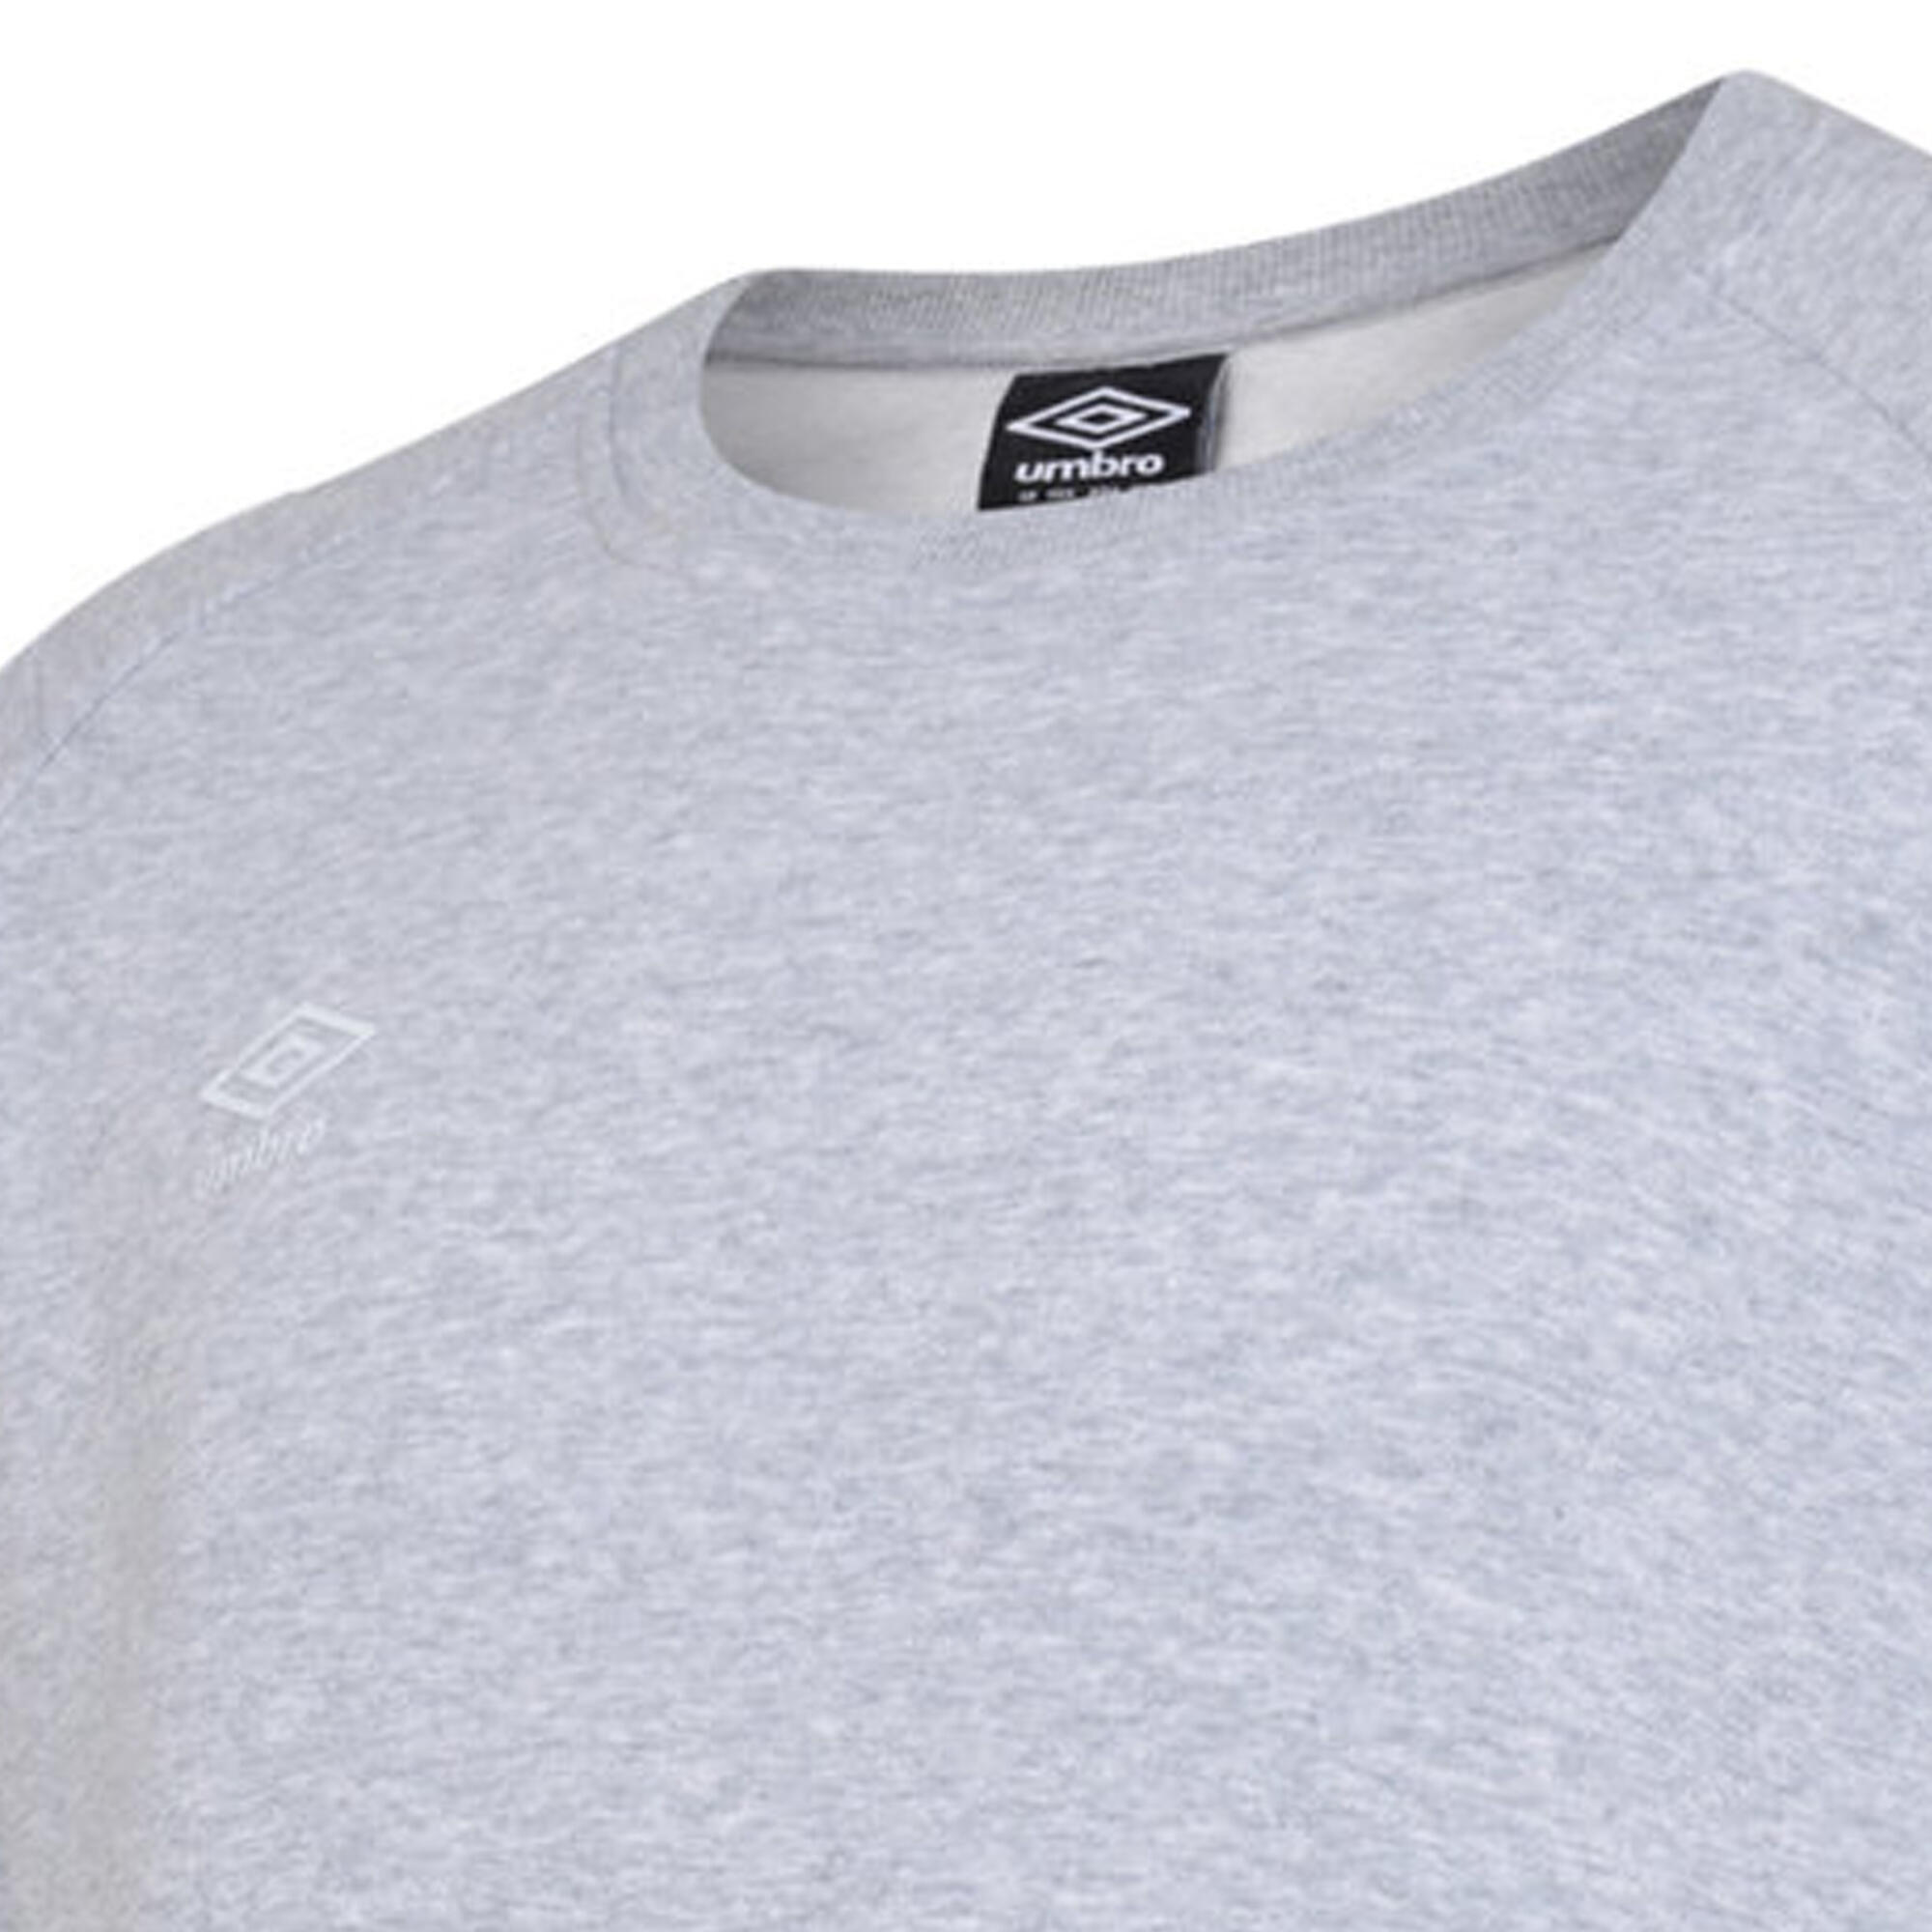 Childrens/Kids Club Leisure Sweatshirt (Grey Marl/White) 3/3